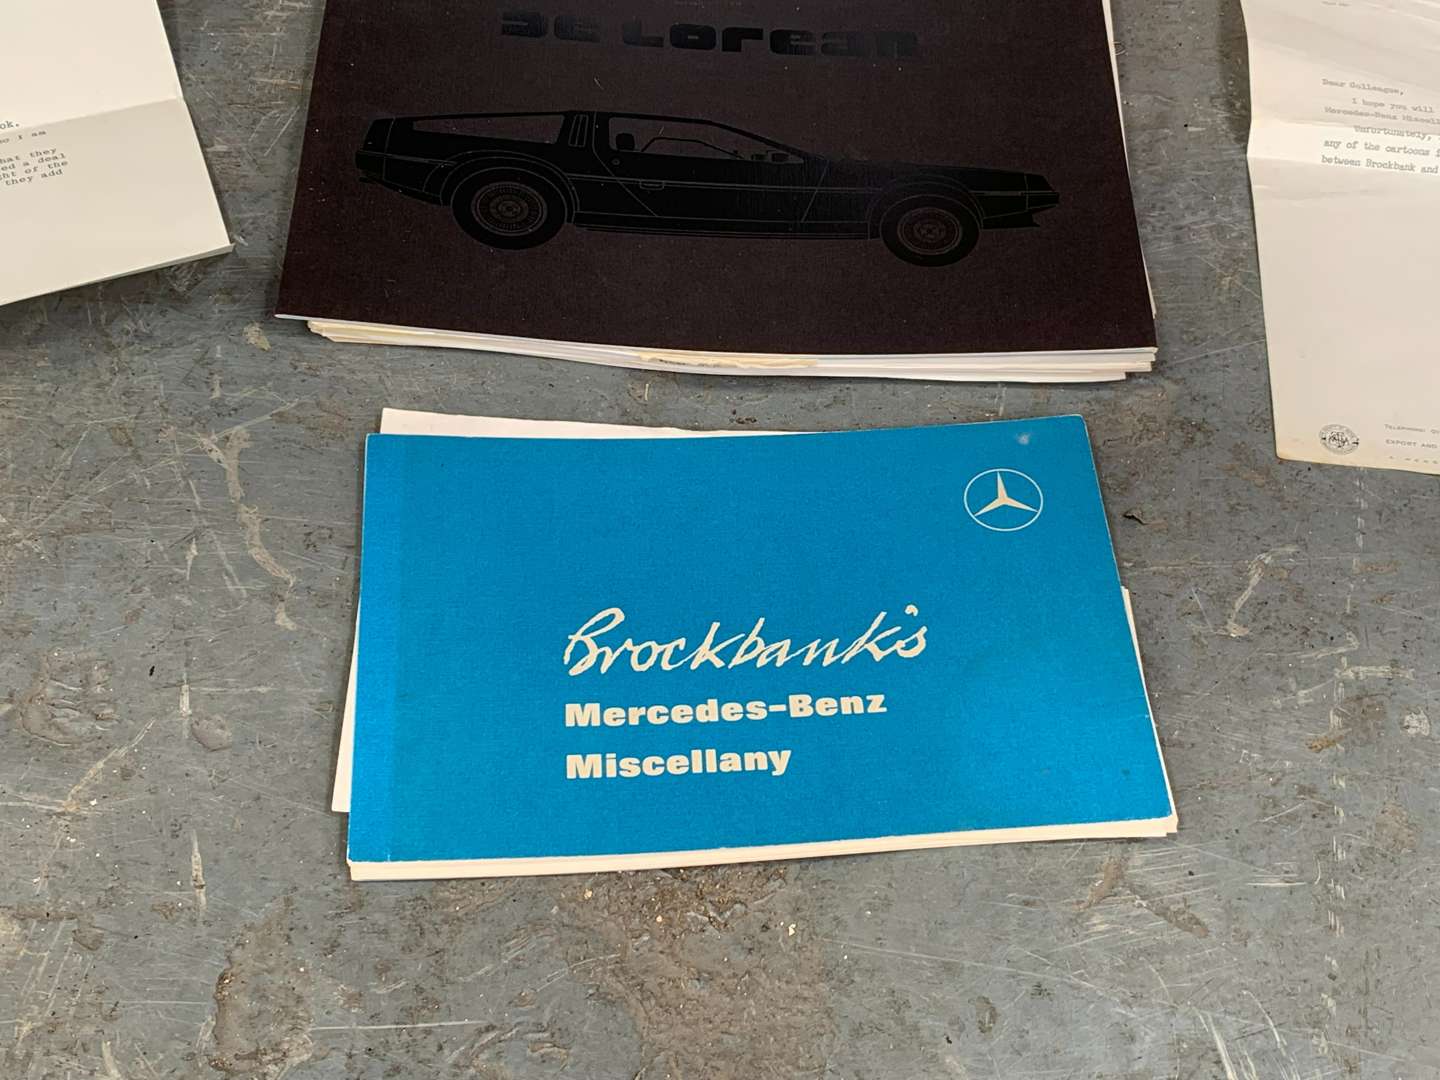 <p>DeLorean Booklet and Mercedes Paperwork</p>